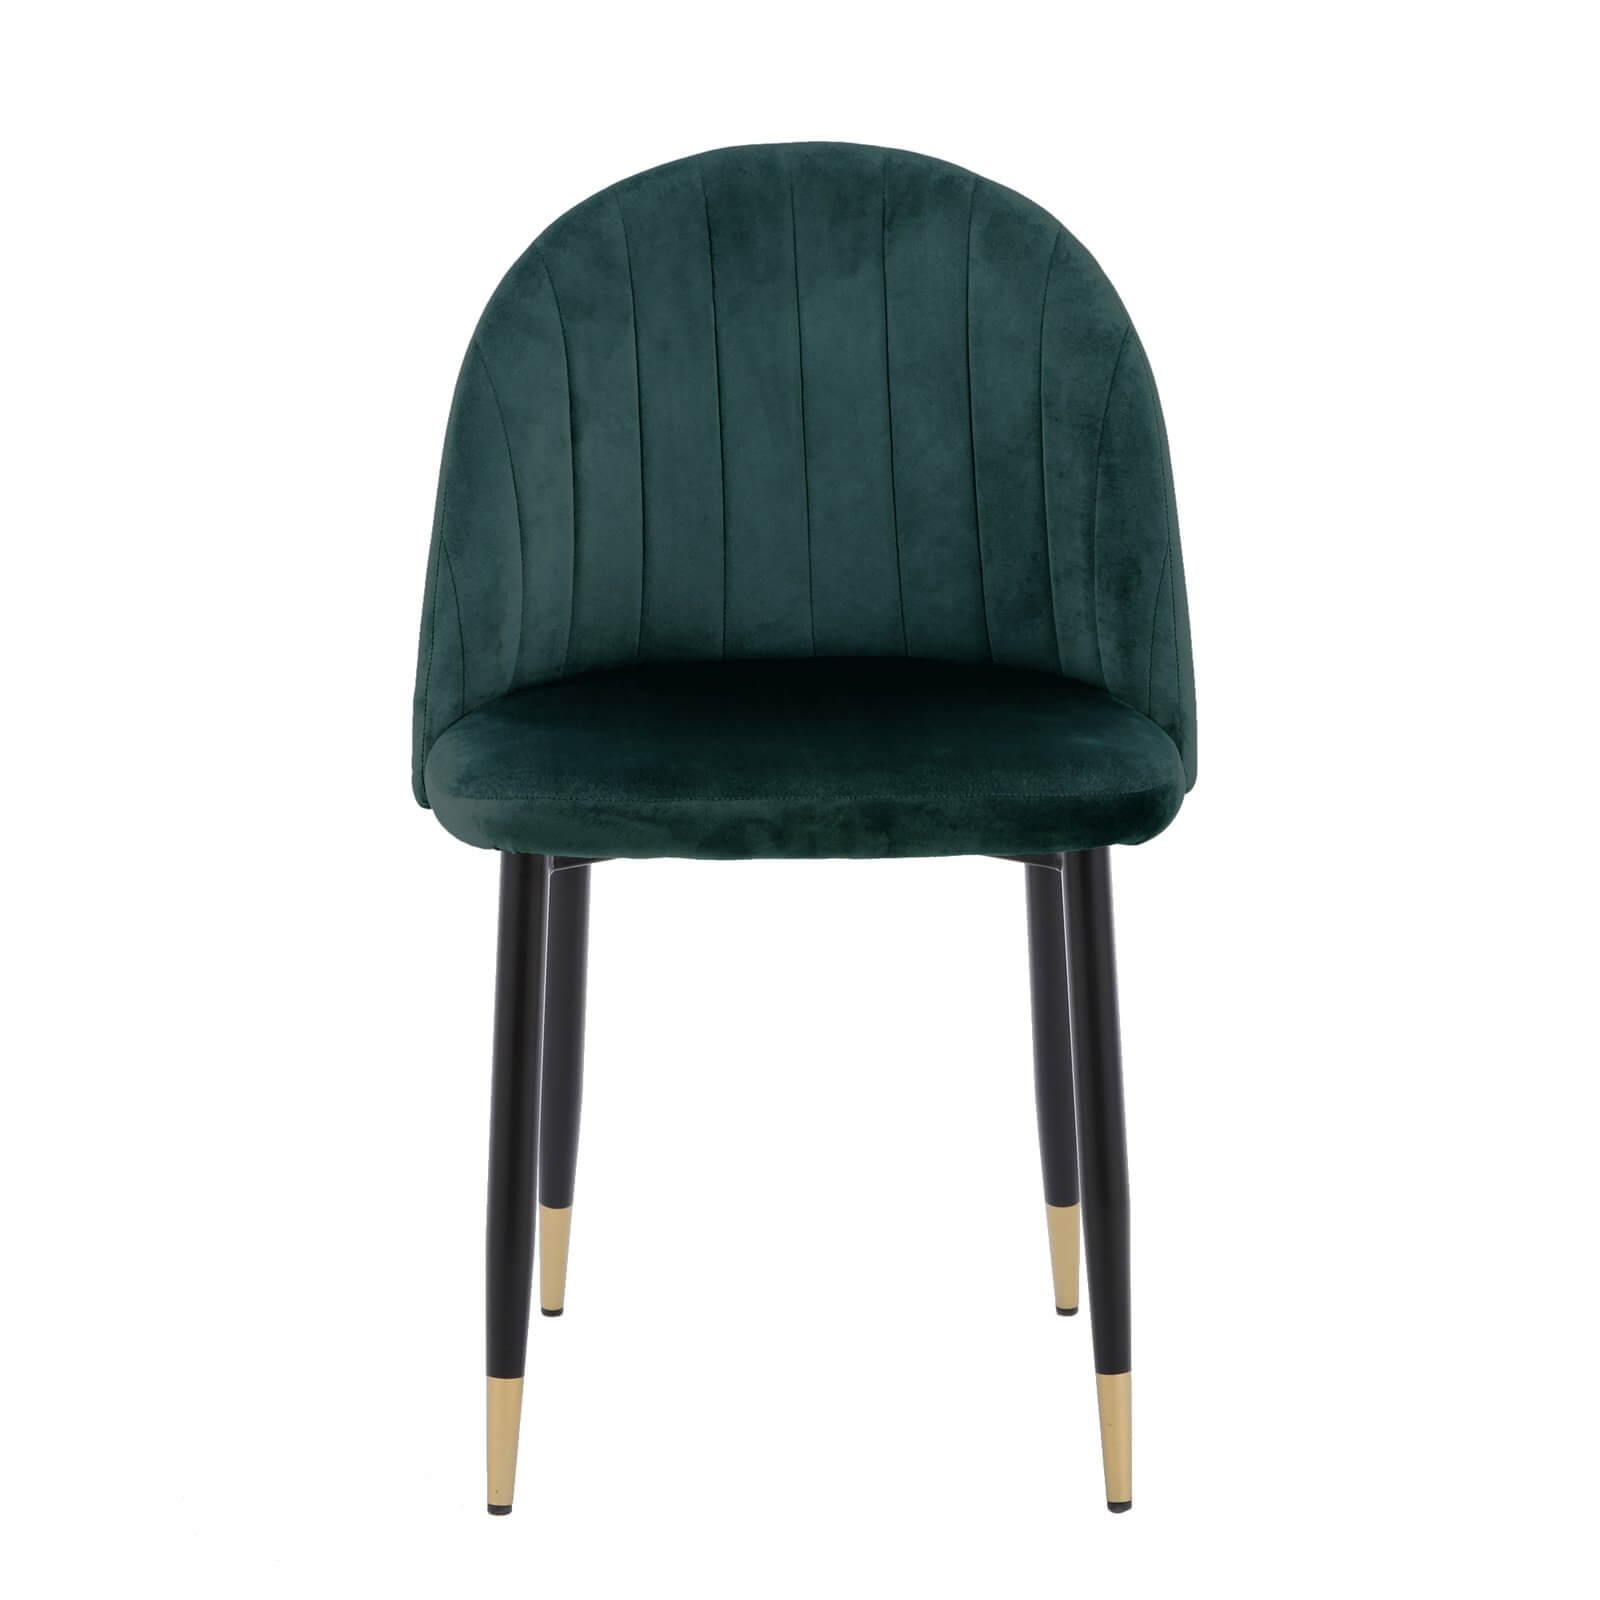 Illona Velvet Dining Chairs - Set of 2 - Emerald